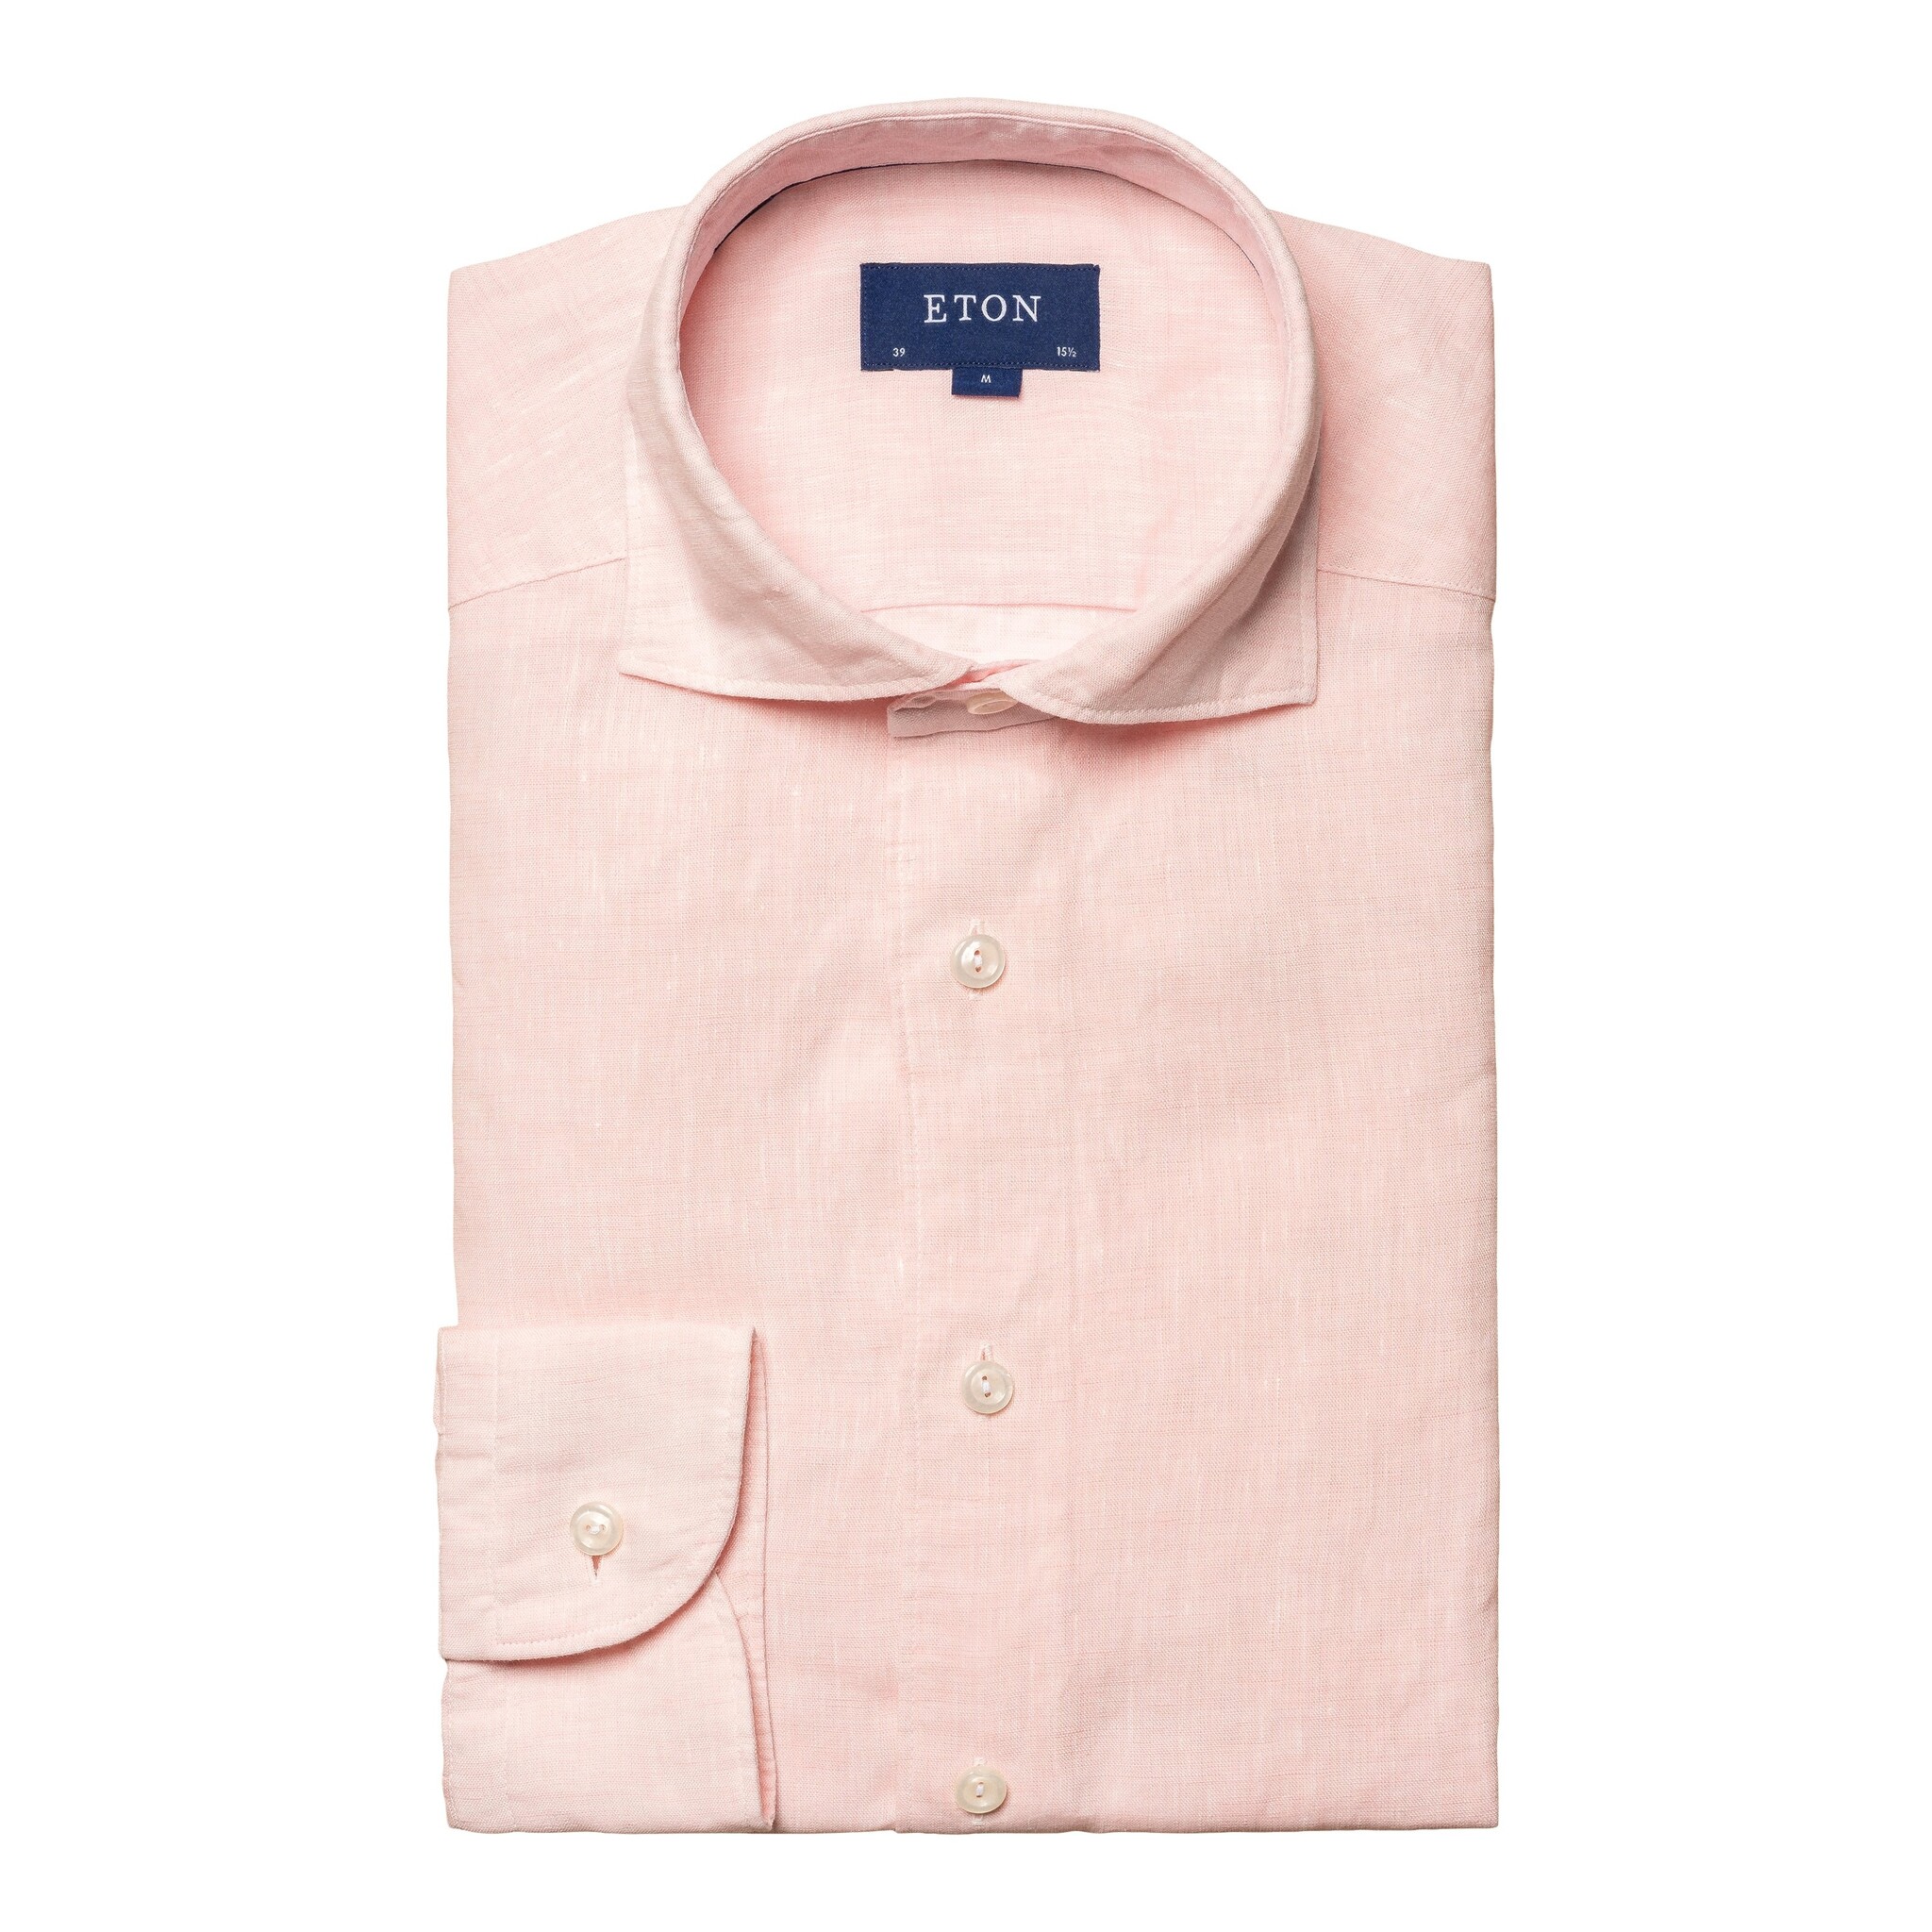 Eton Linen Shirt with wide spread collar